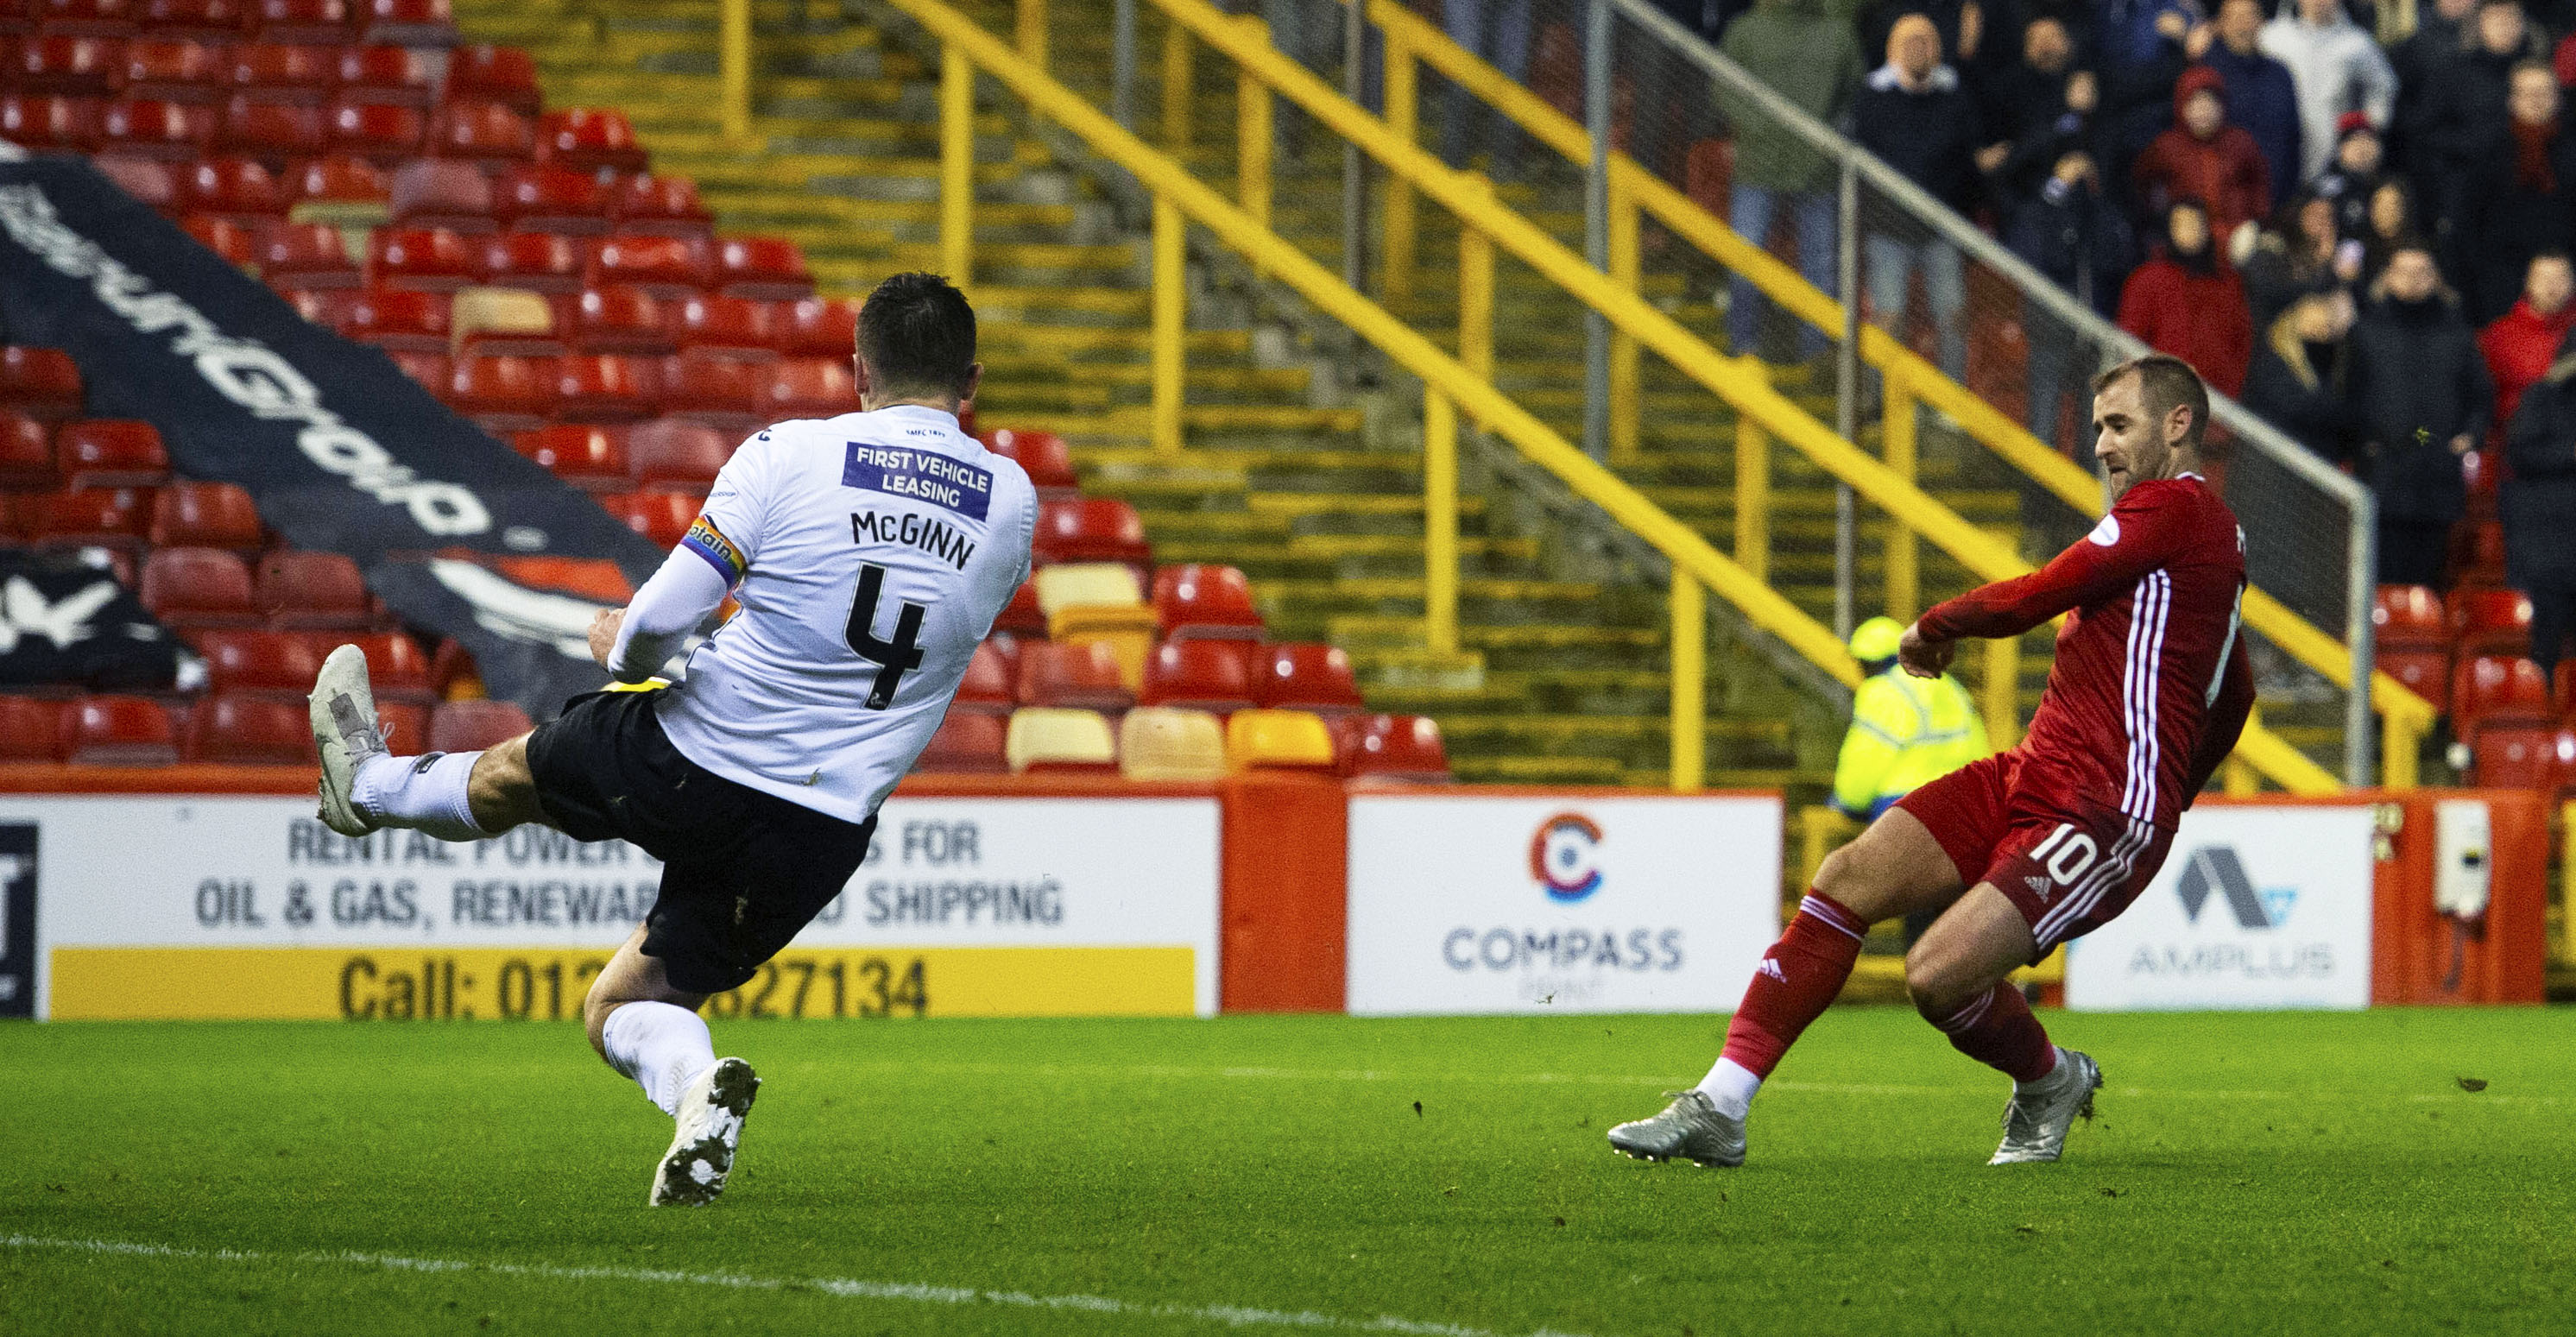 Aberdeen's Niall McGinn scores to make it 2-1 against St Mirren.